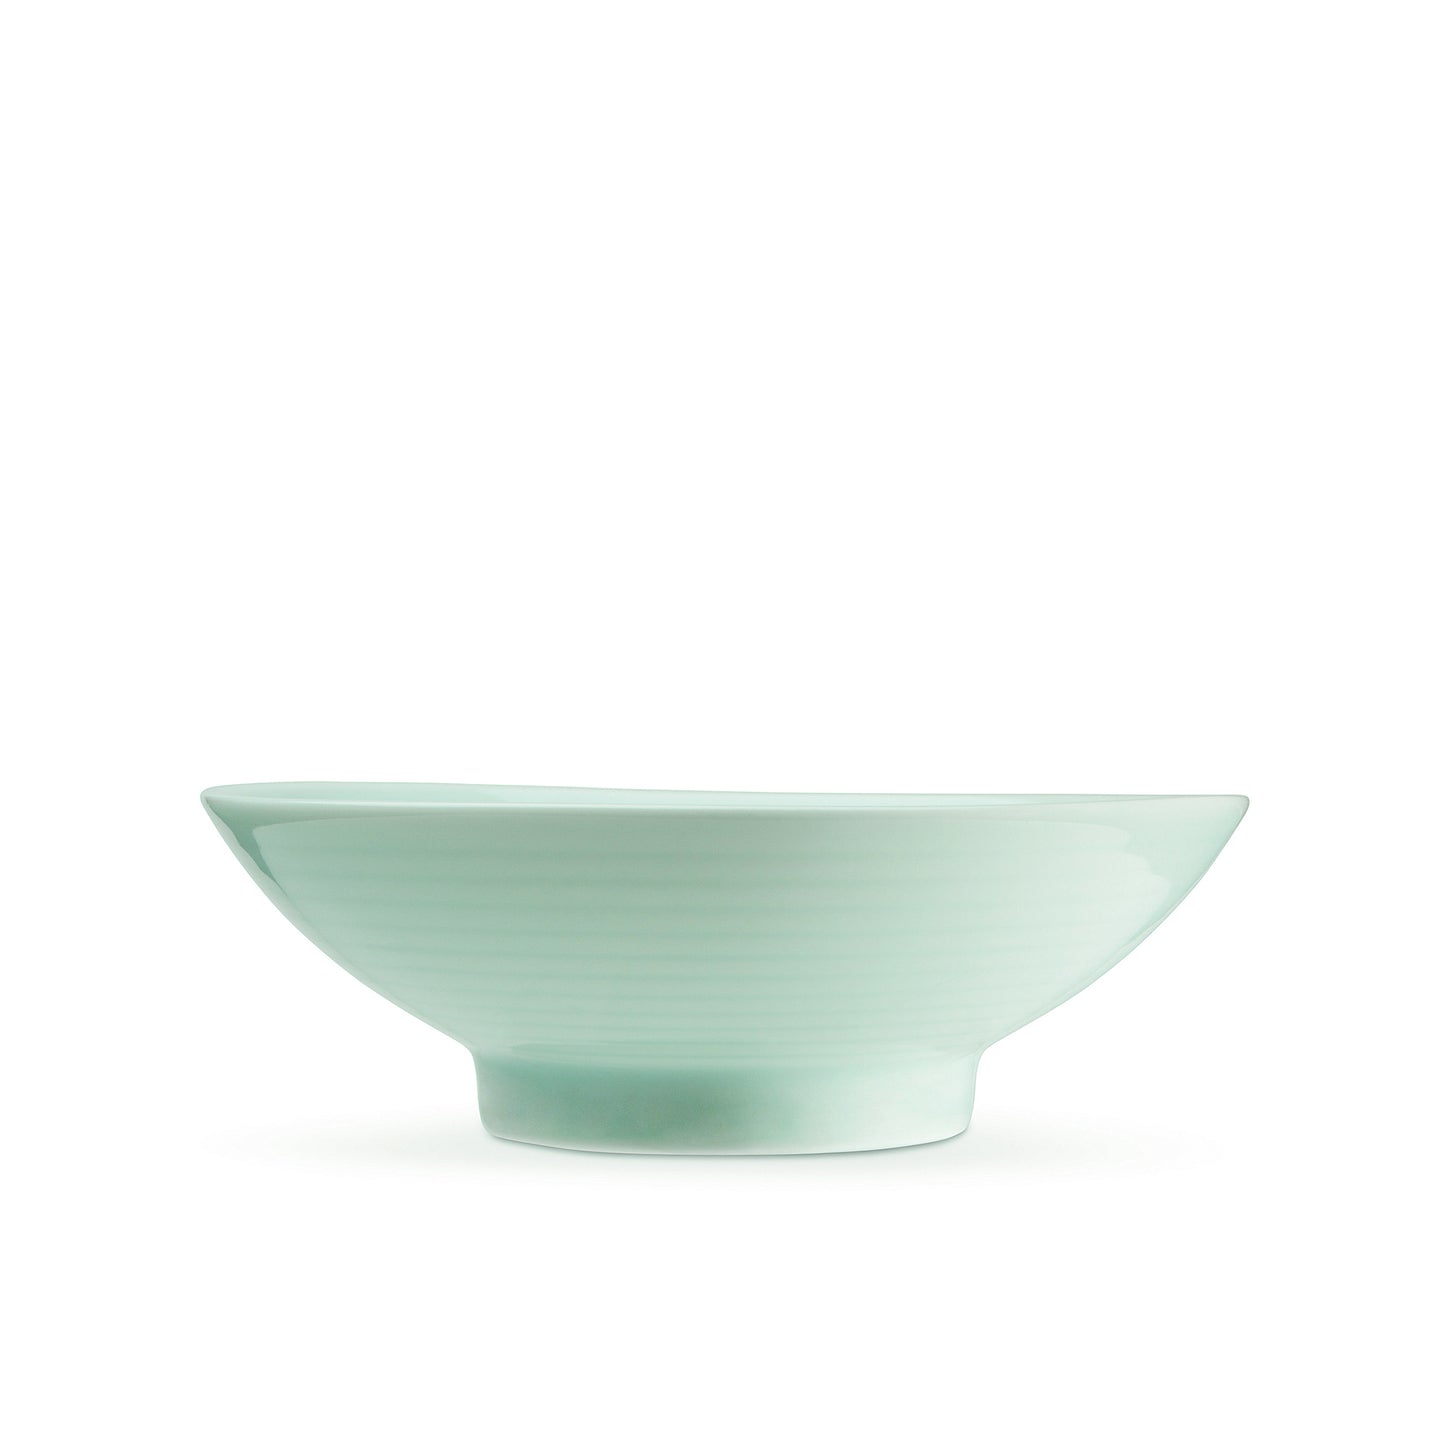 7" green celadon porcelain bowl, horizontal view, media 5 of 5